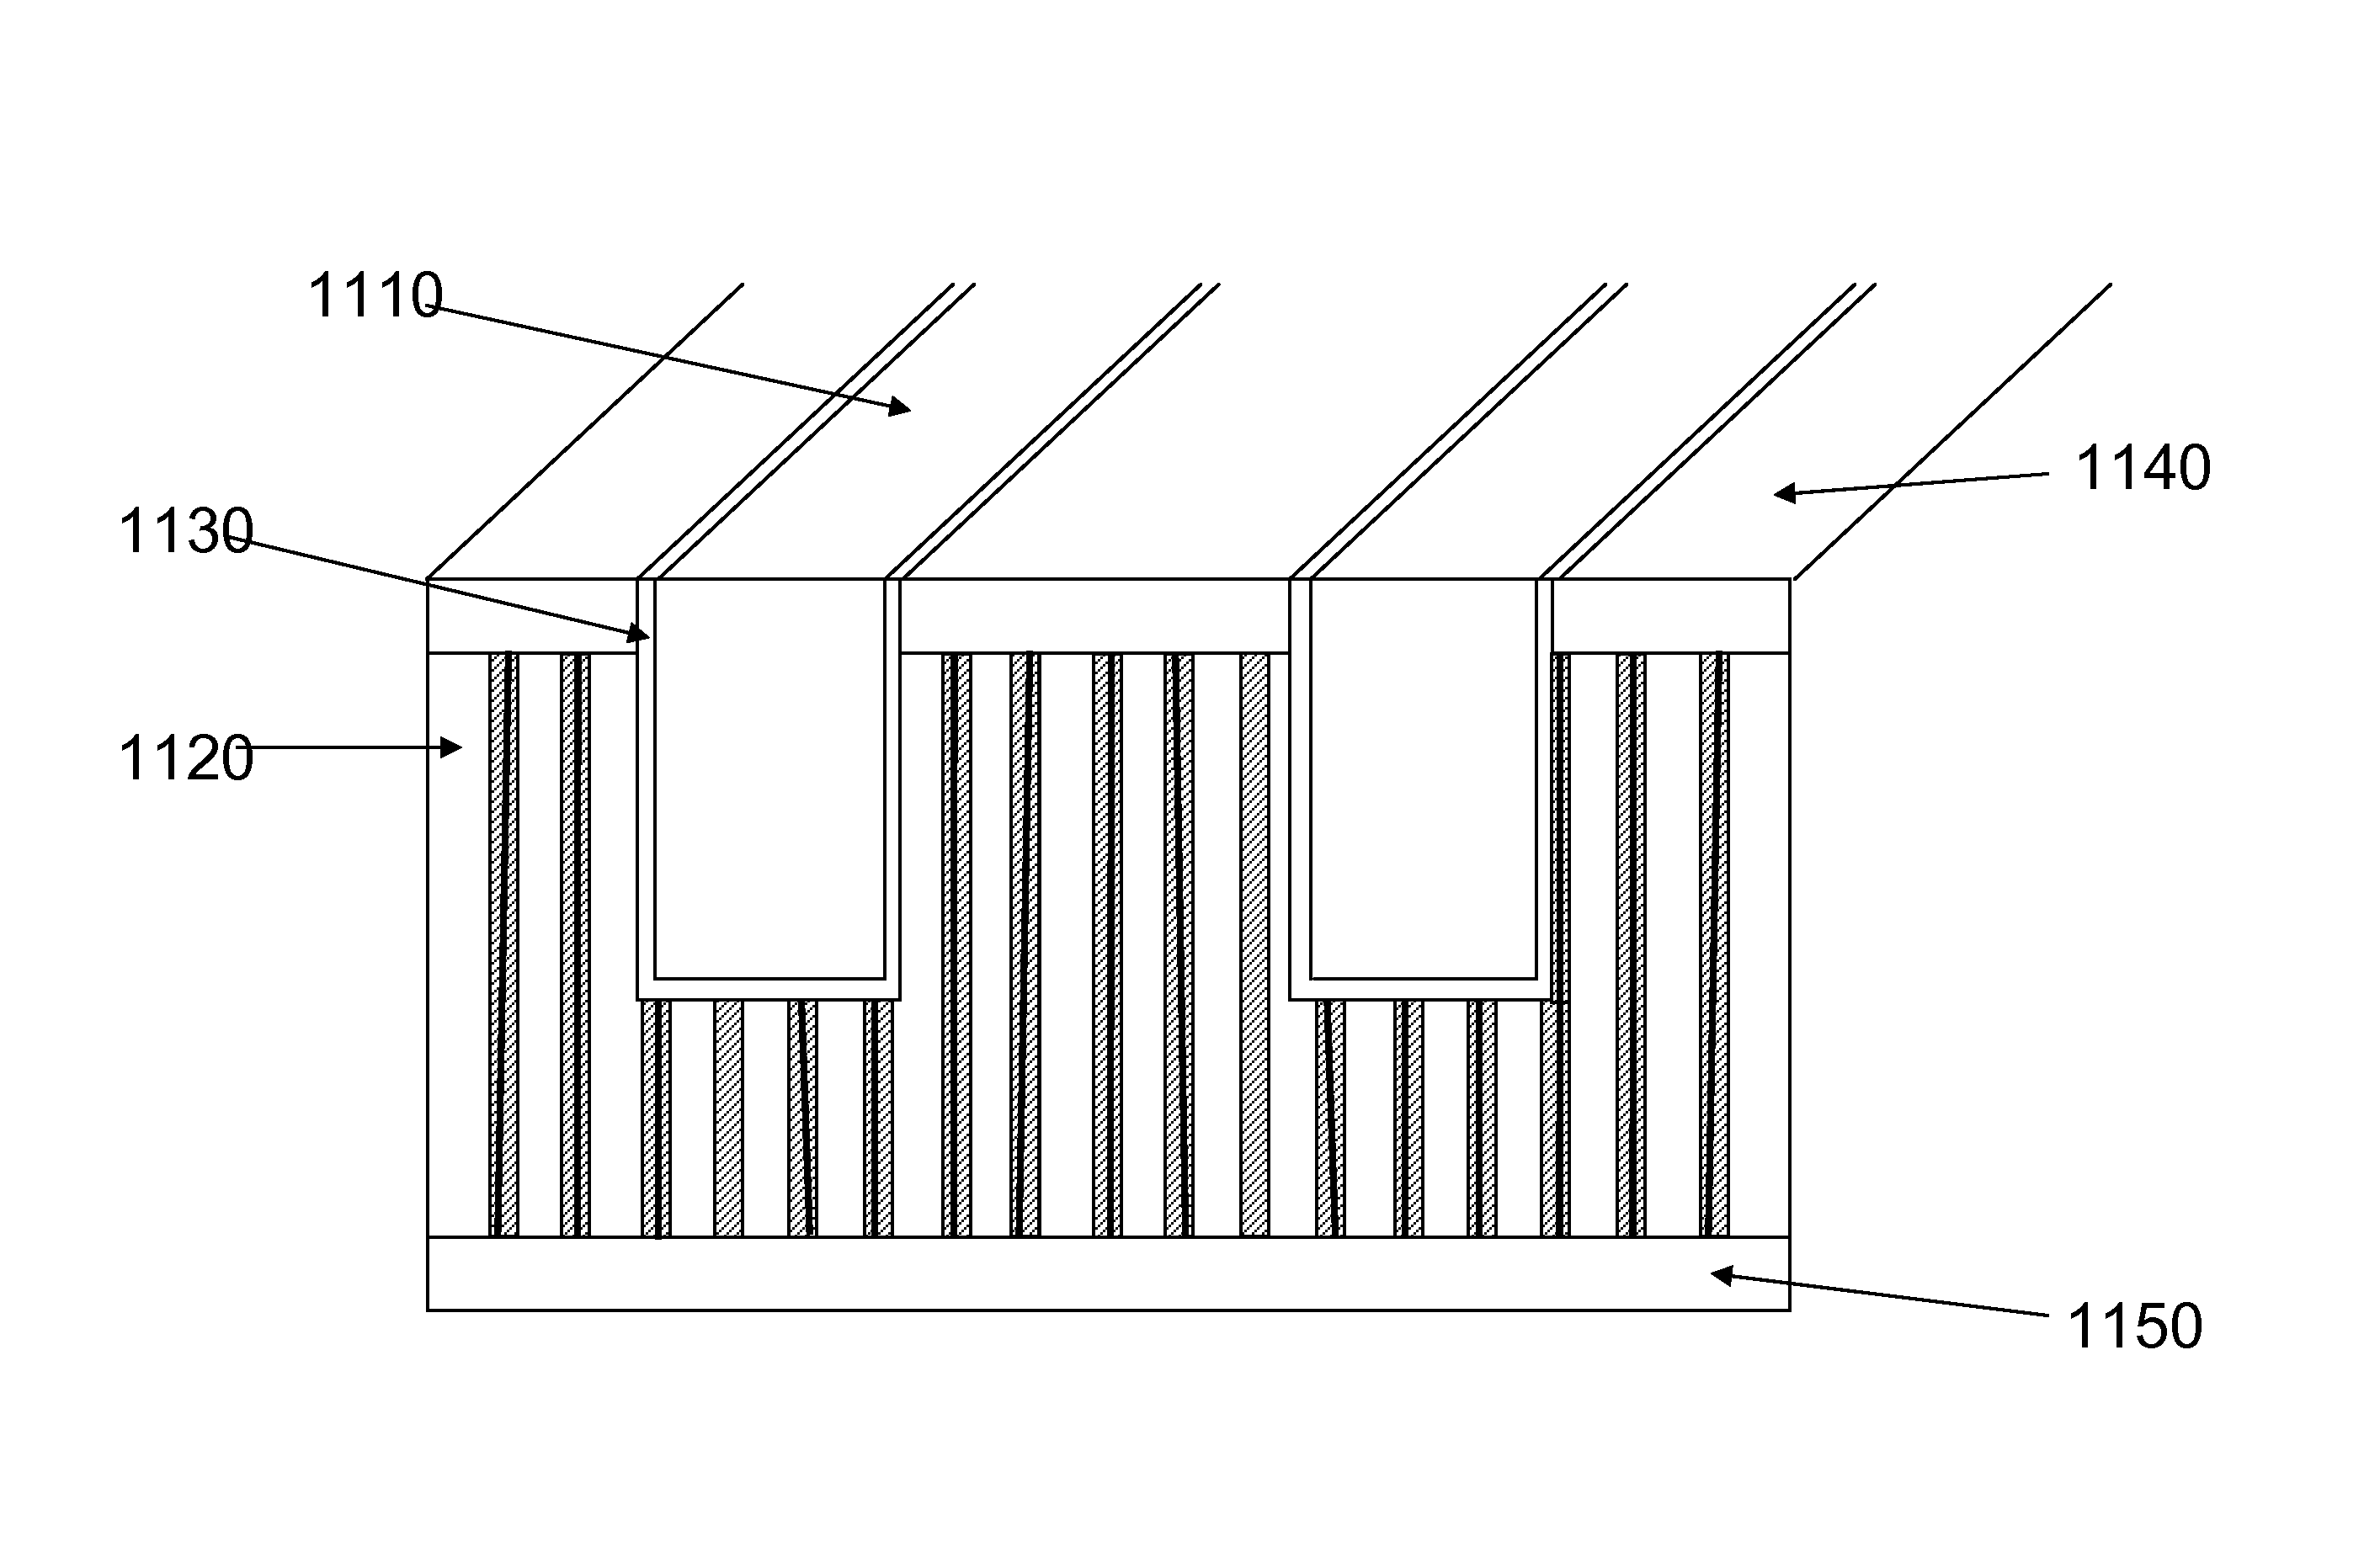 Nanotube transistor integrated circuit layout